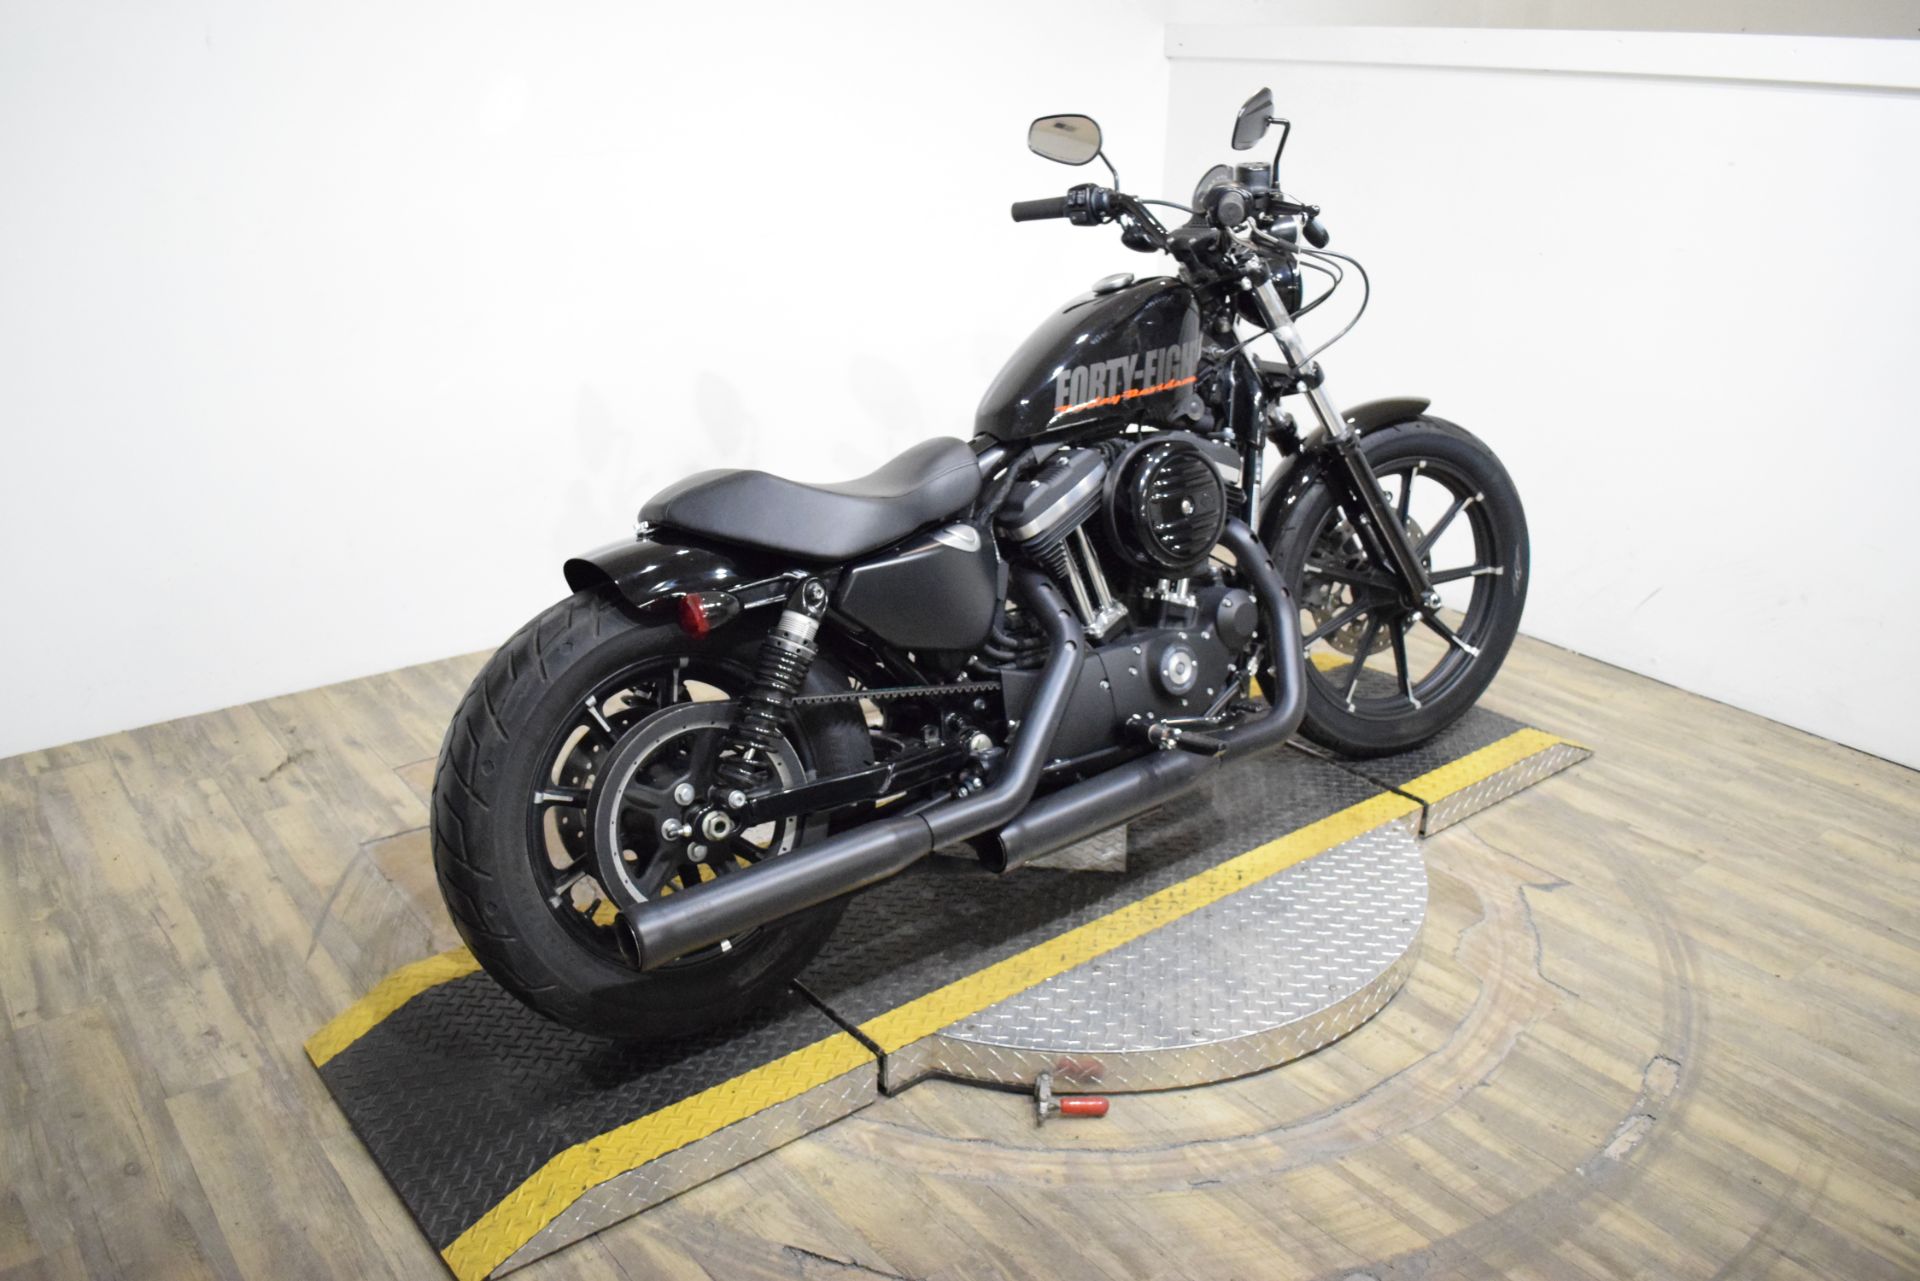 2021 Harley-Davidson Iron 883™ in Wauconda, Illinois - Photo 9